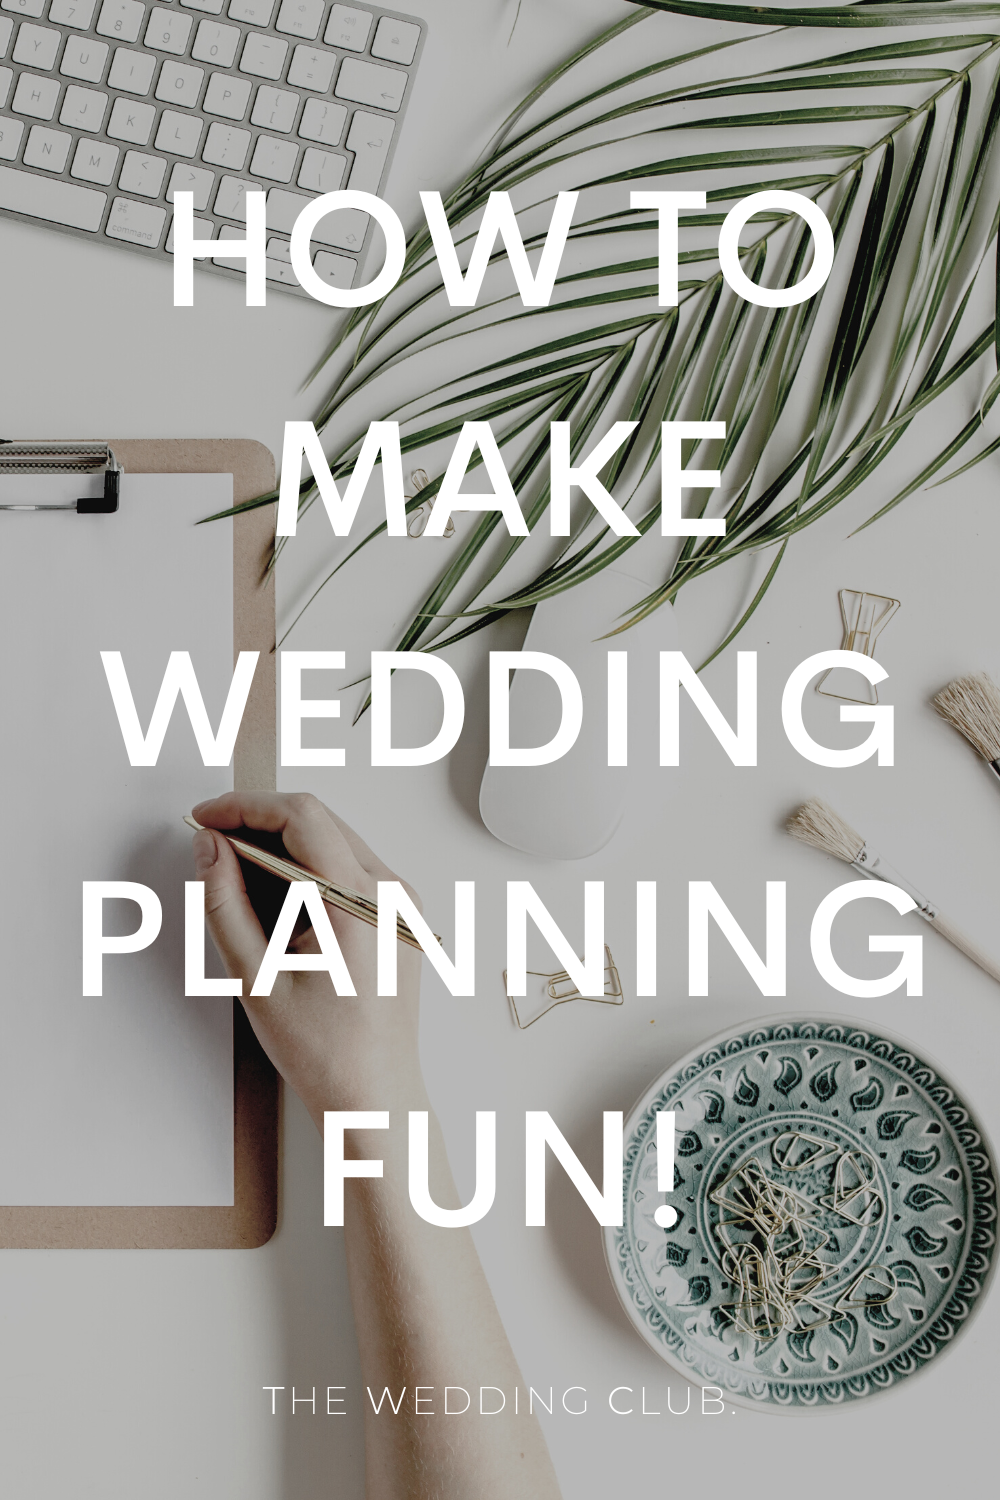 How to make wedding planning fun - 10 tips - The Wedding Club